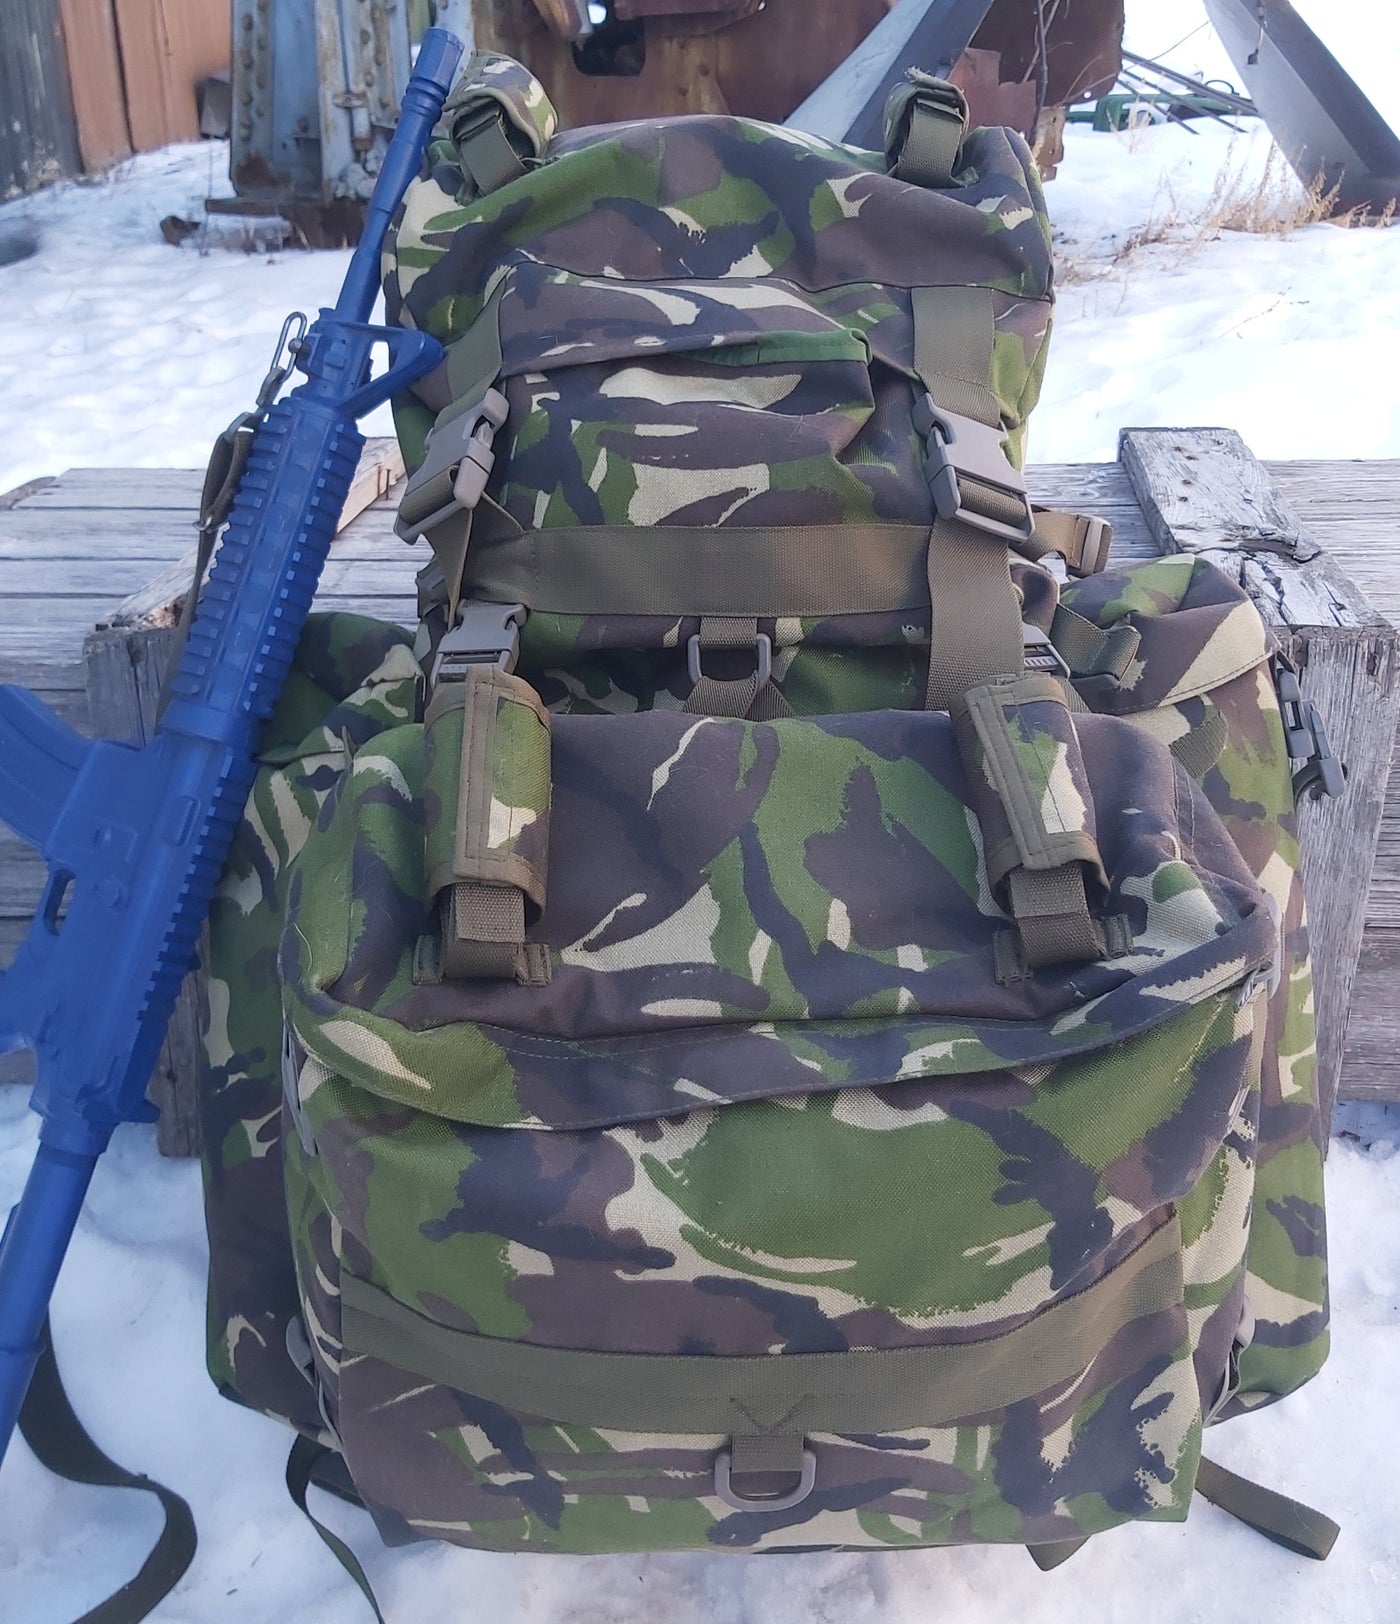 Romanian DPM XL Combat Rucksack